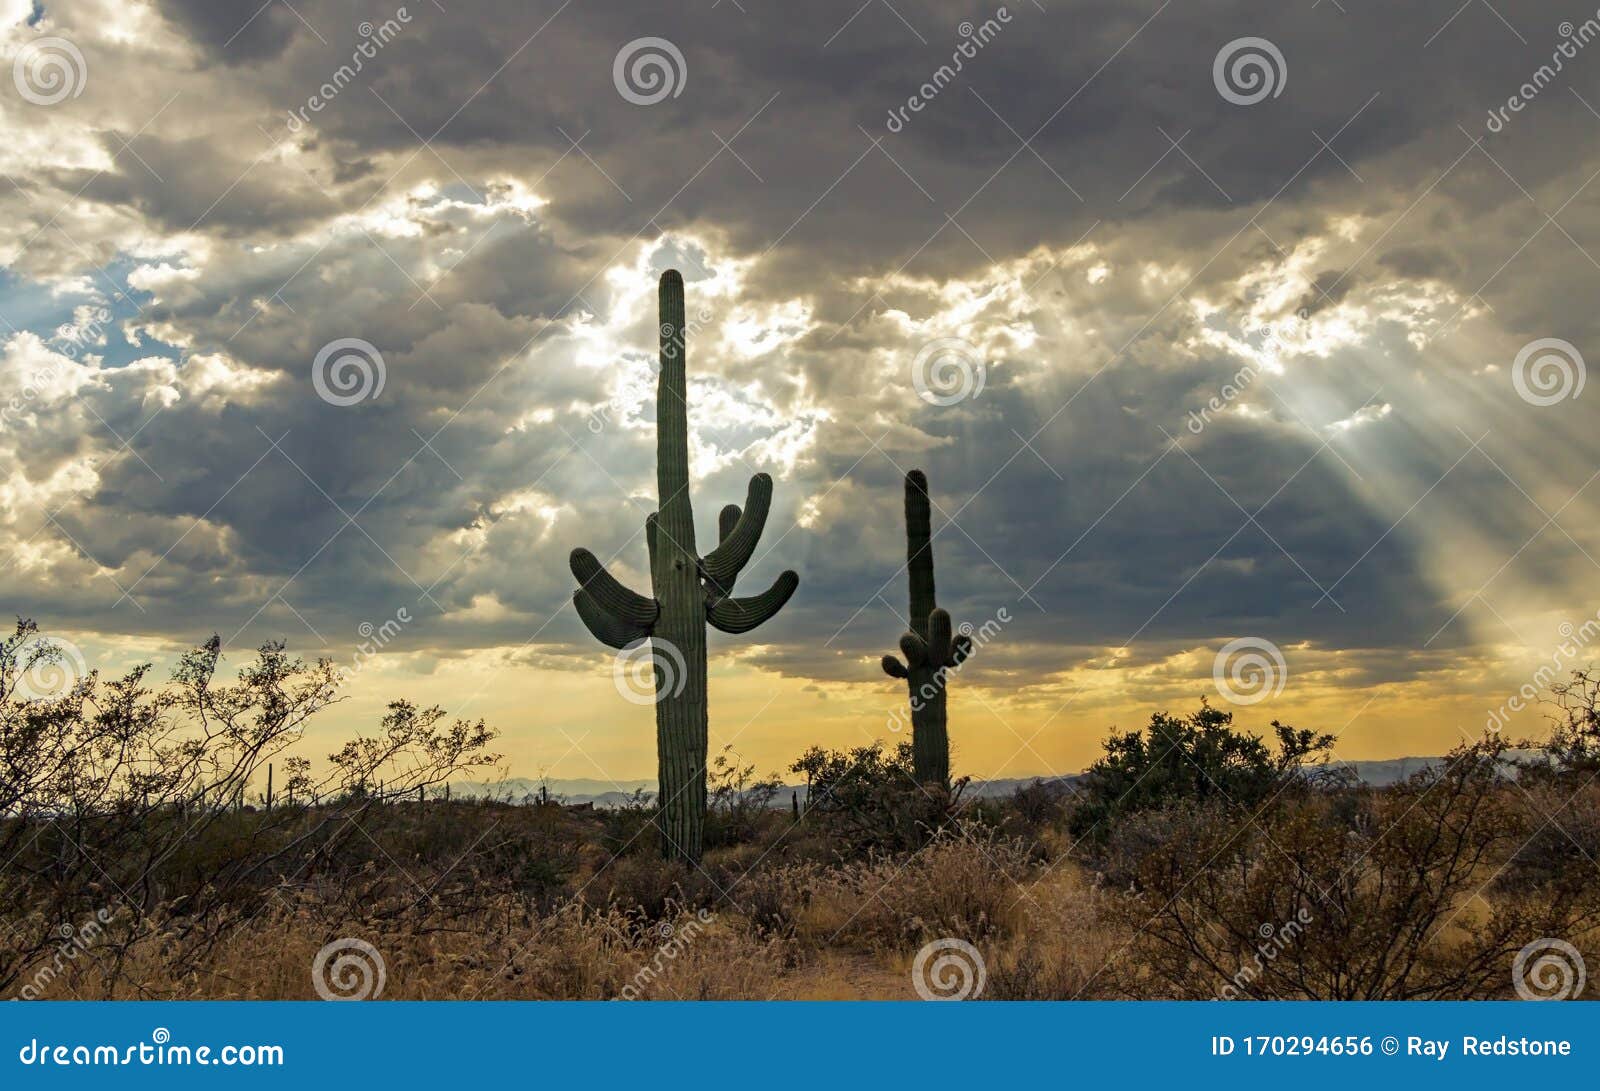 sagurao cactus with sun rays beaming down